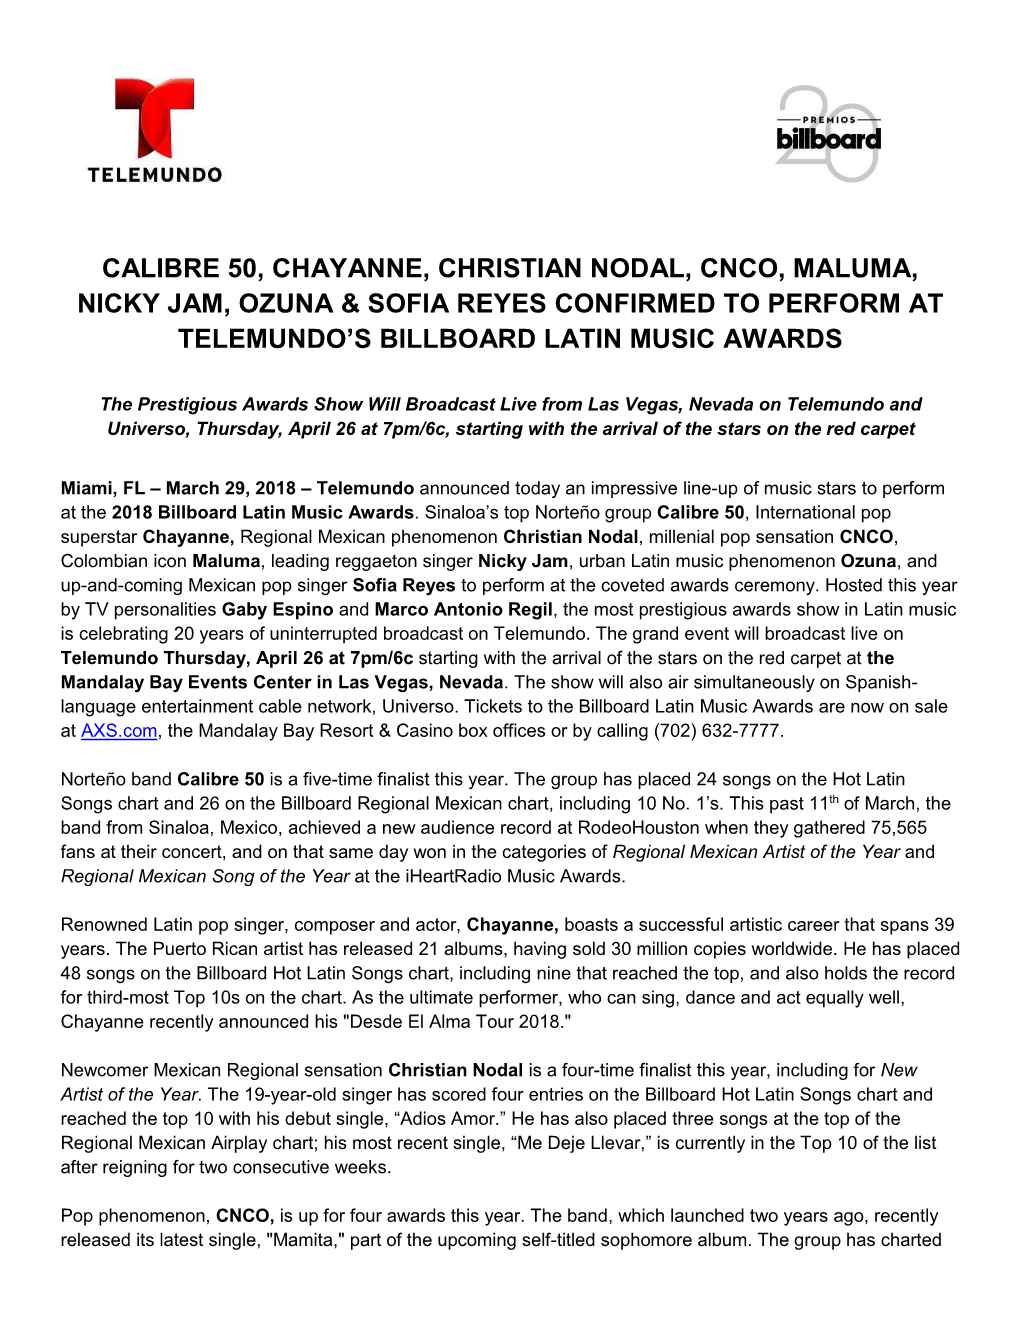 Calibre 50, Chayanne, Christian Nodal, Cnco, Maluma, Nicky Jam, Ozuna & Sofia Reyes Confirmed to Perform at Telemundo’S Billboard Latin Music Awards